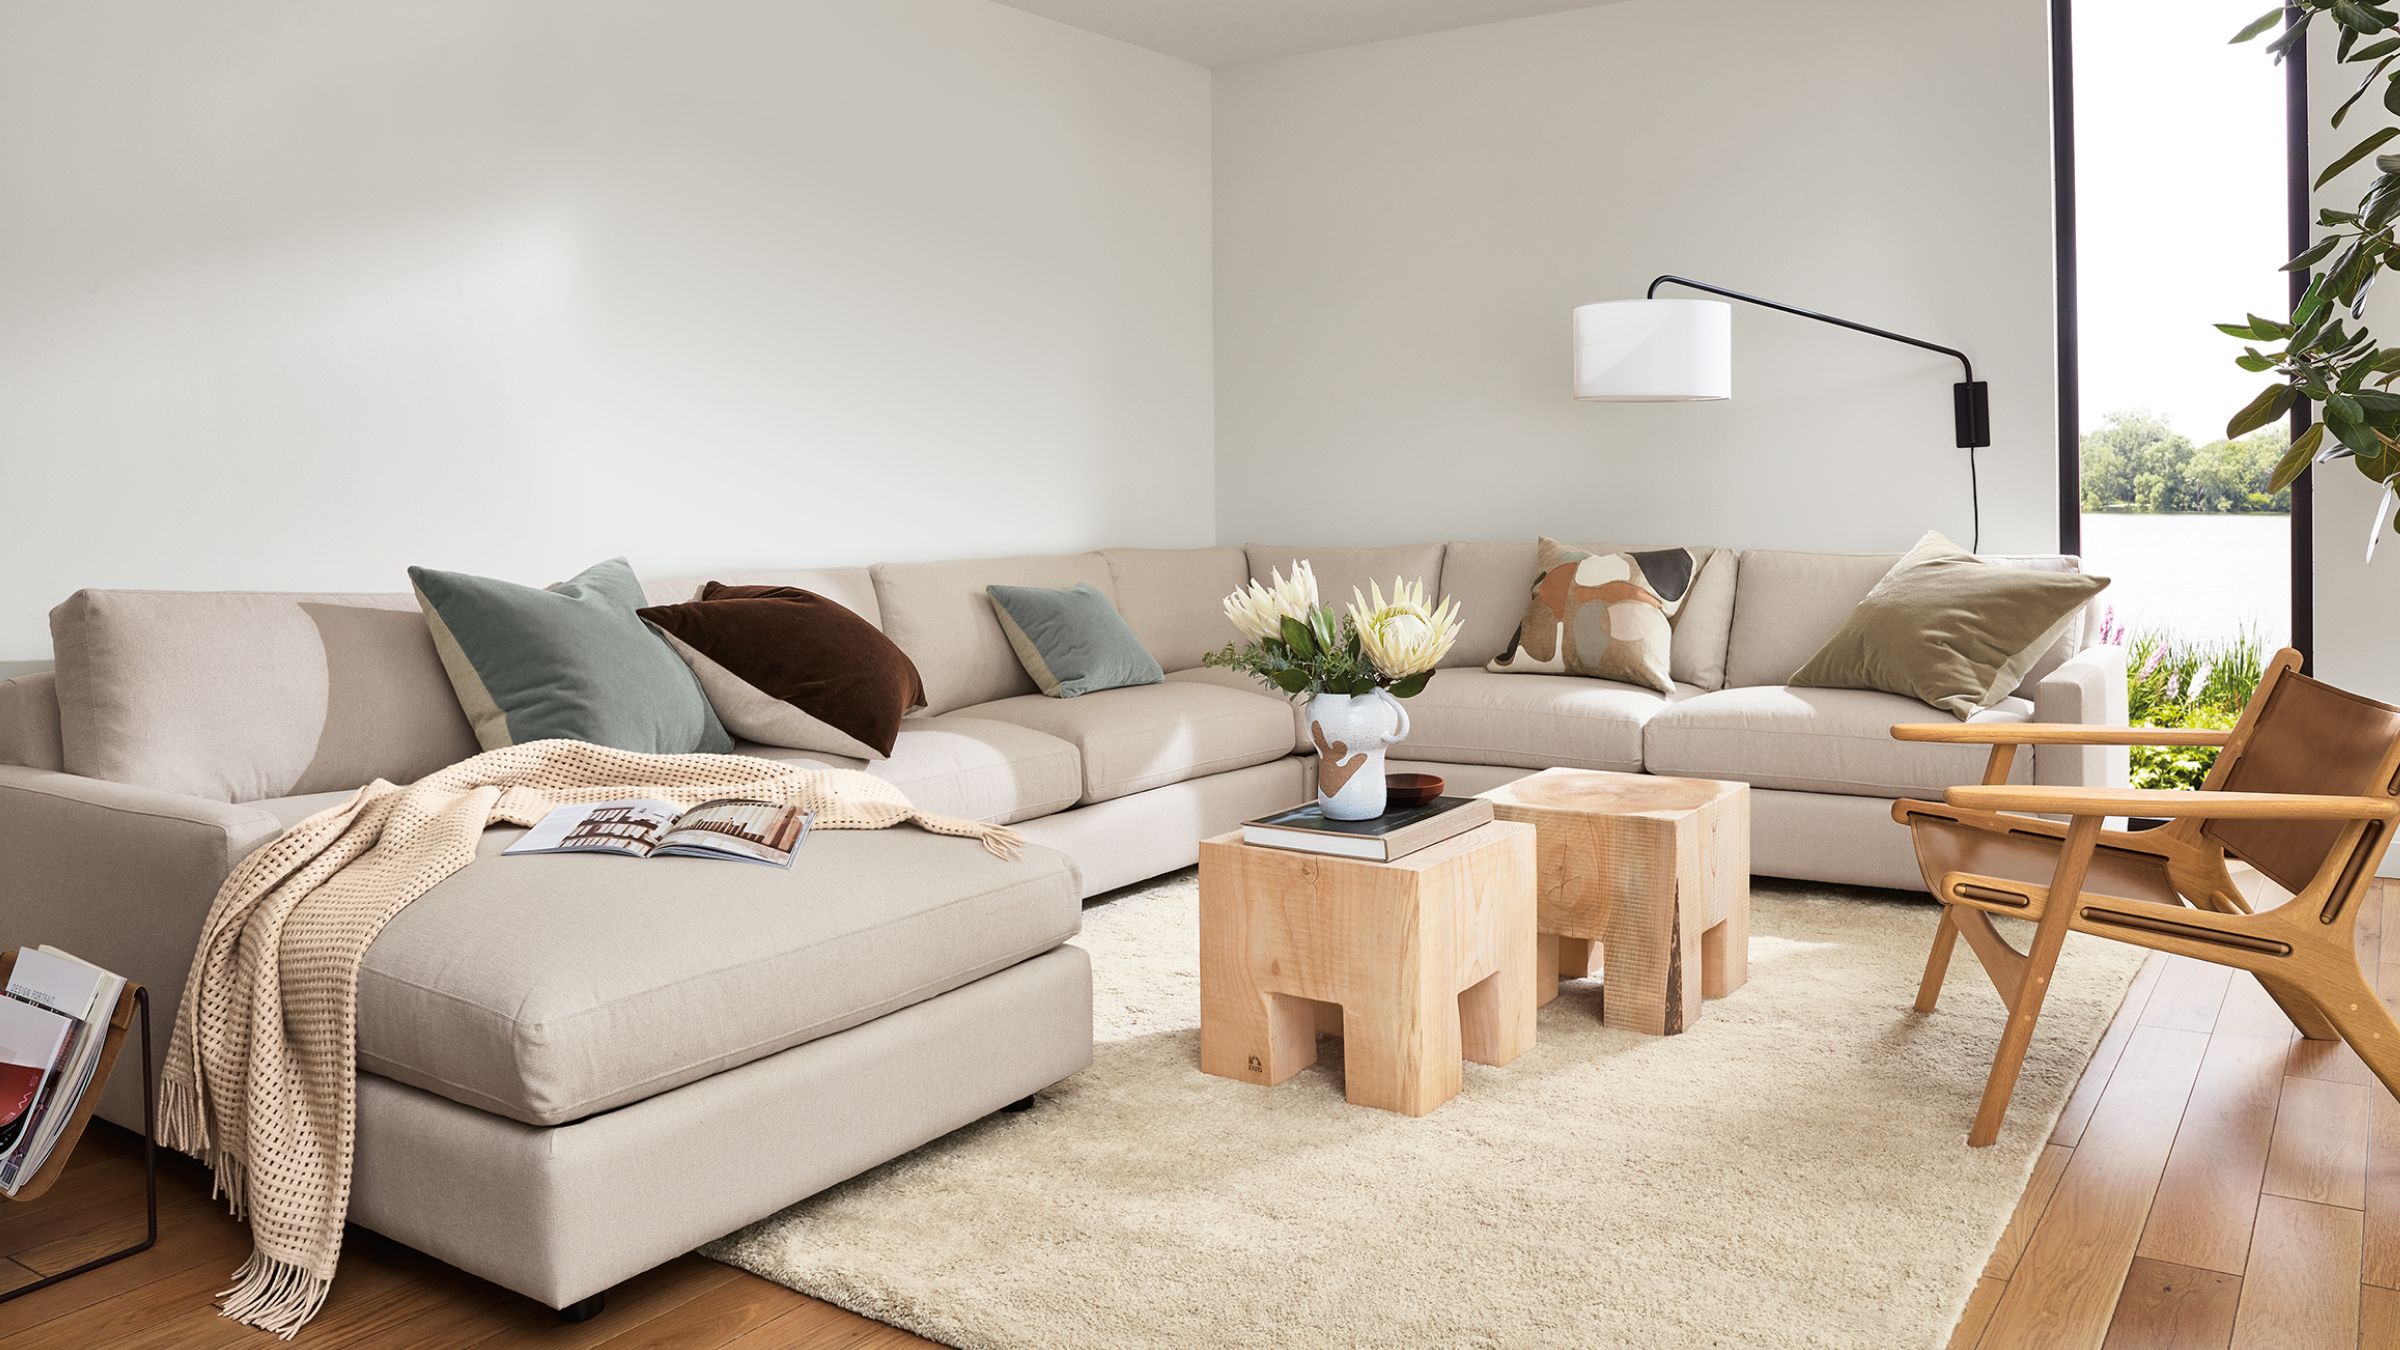 Modern Bedroom Furniture - Room & Board